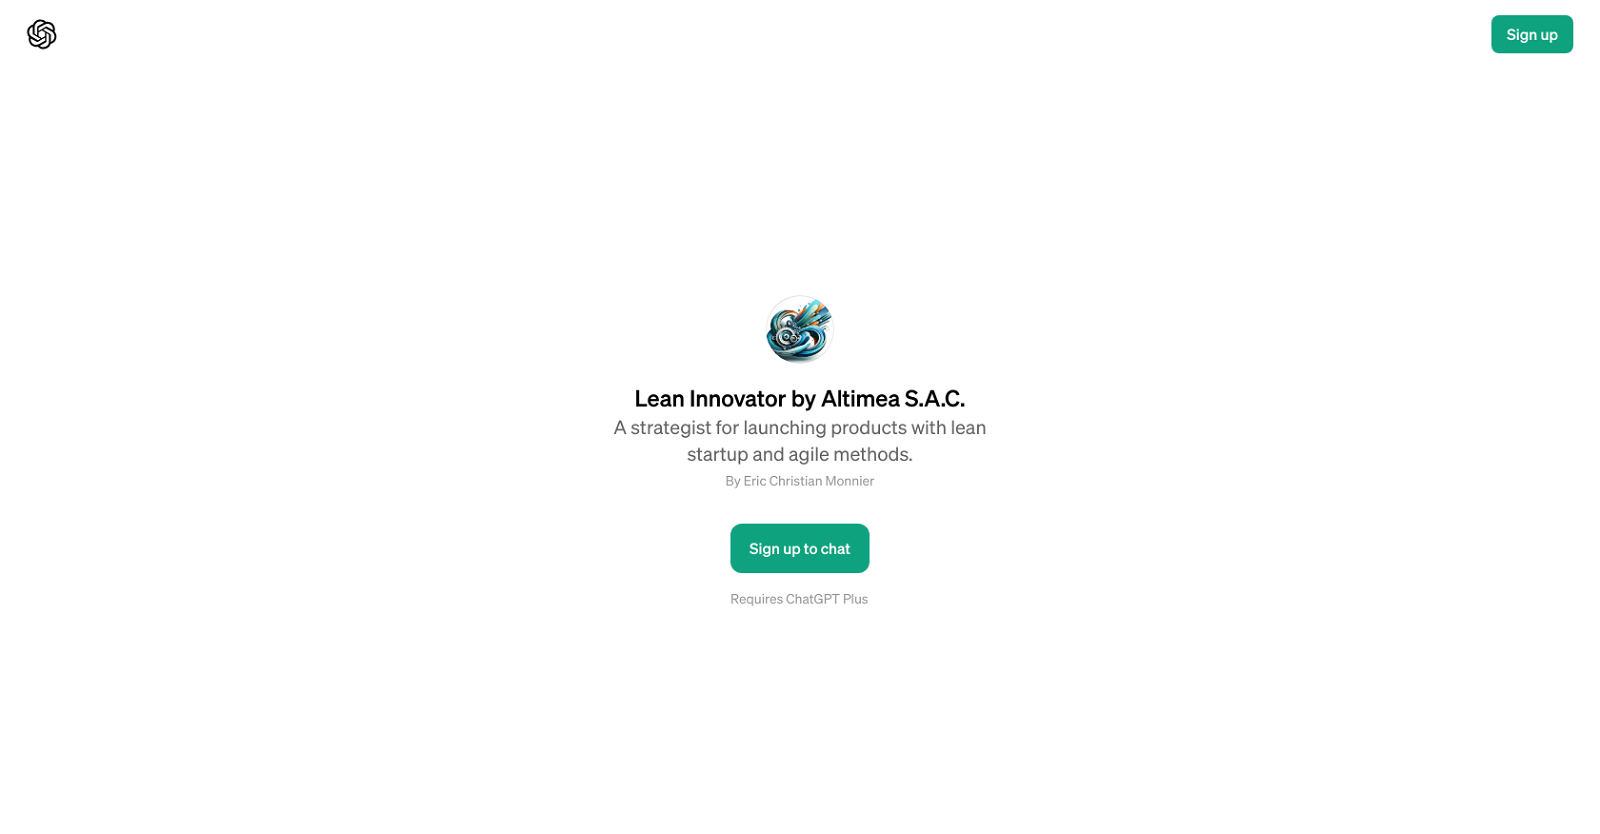 Lean Innovator by Altimea S.A.C. website